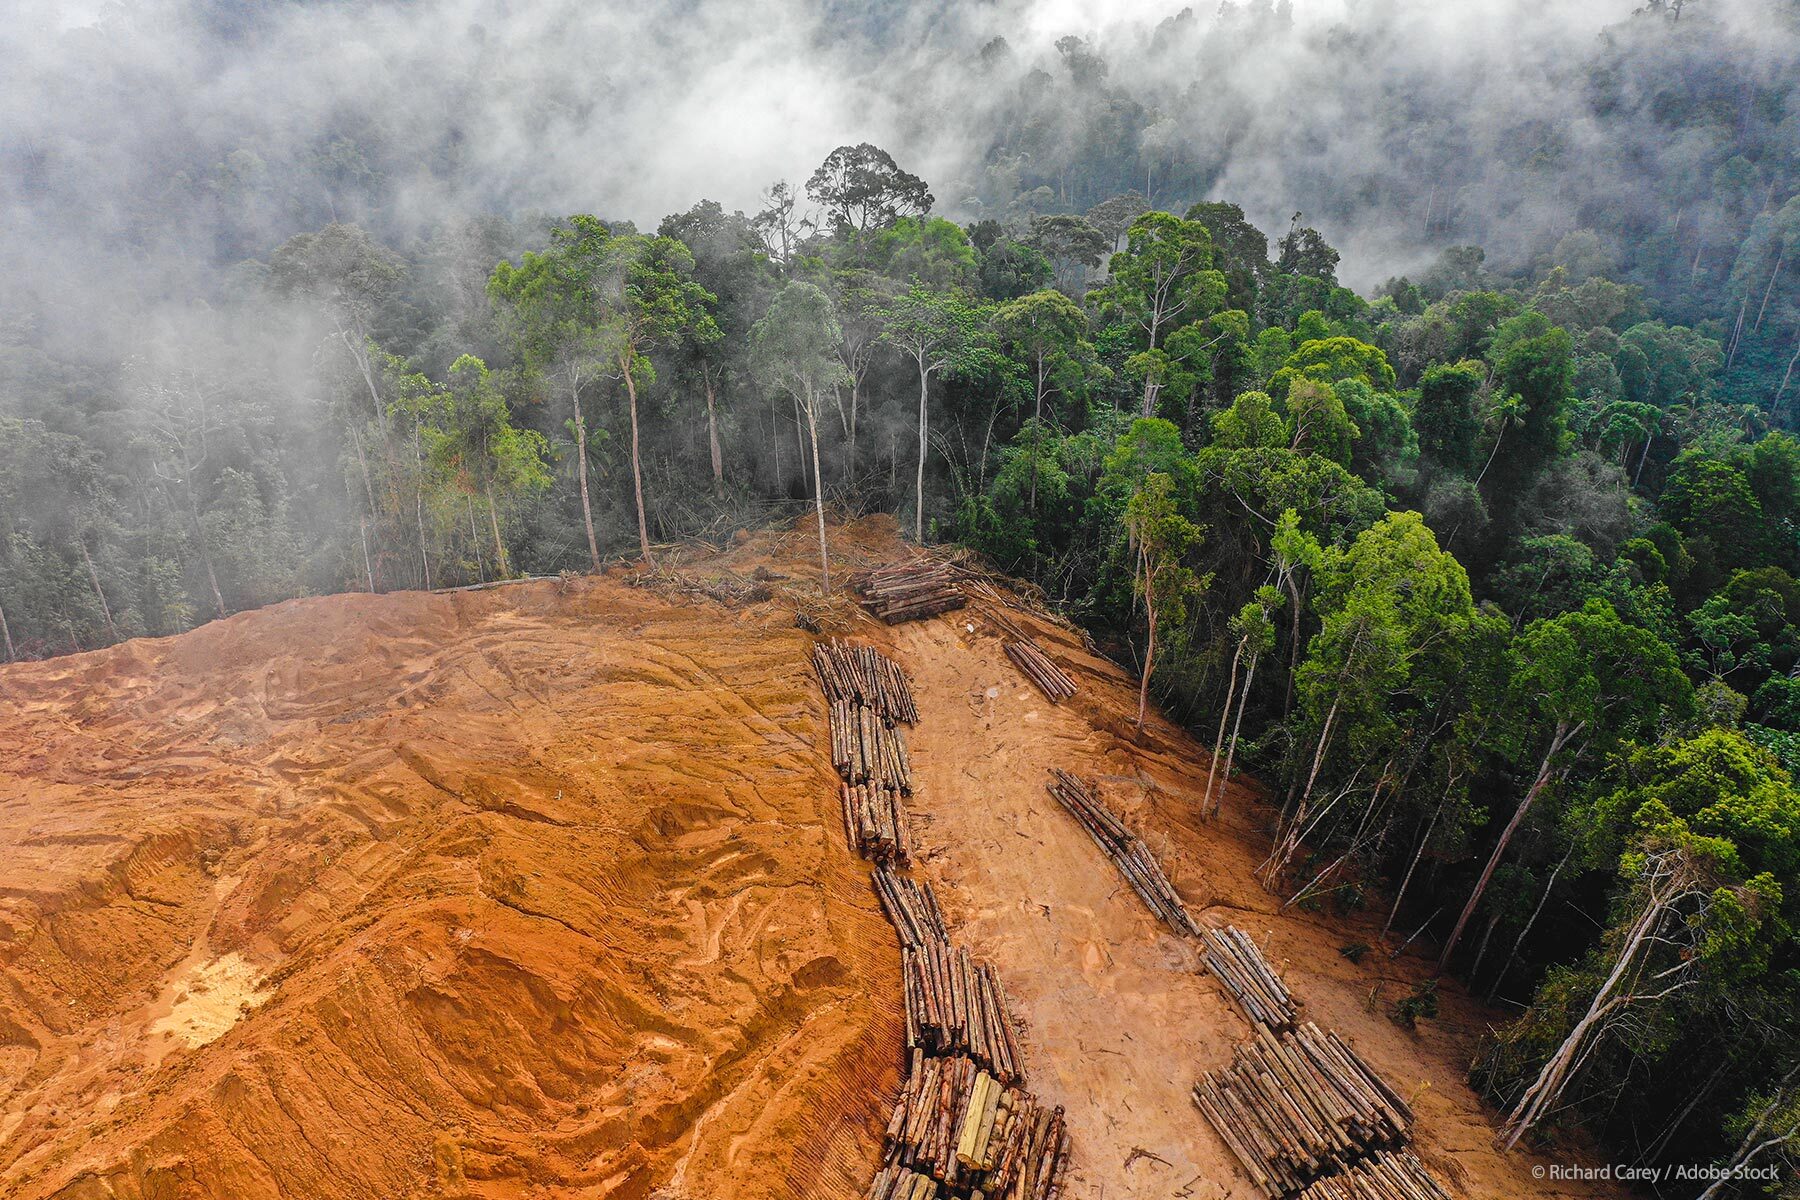 Europe's deforestation fight: Impact on Türkiye and global trade